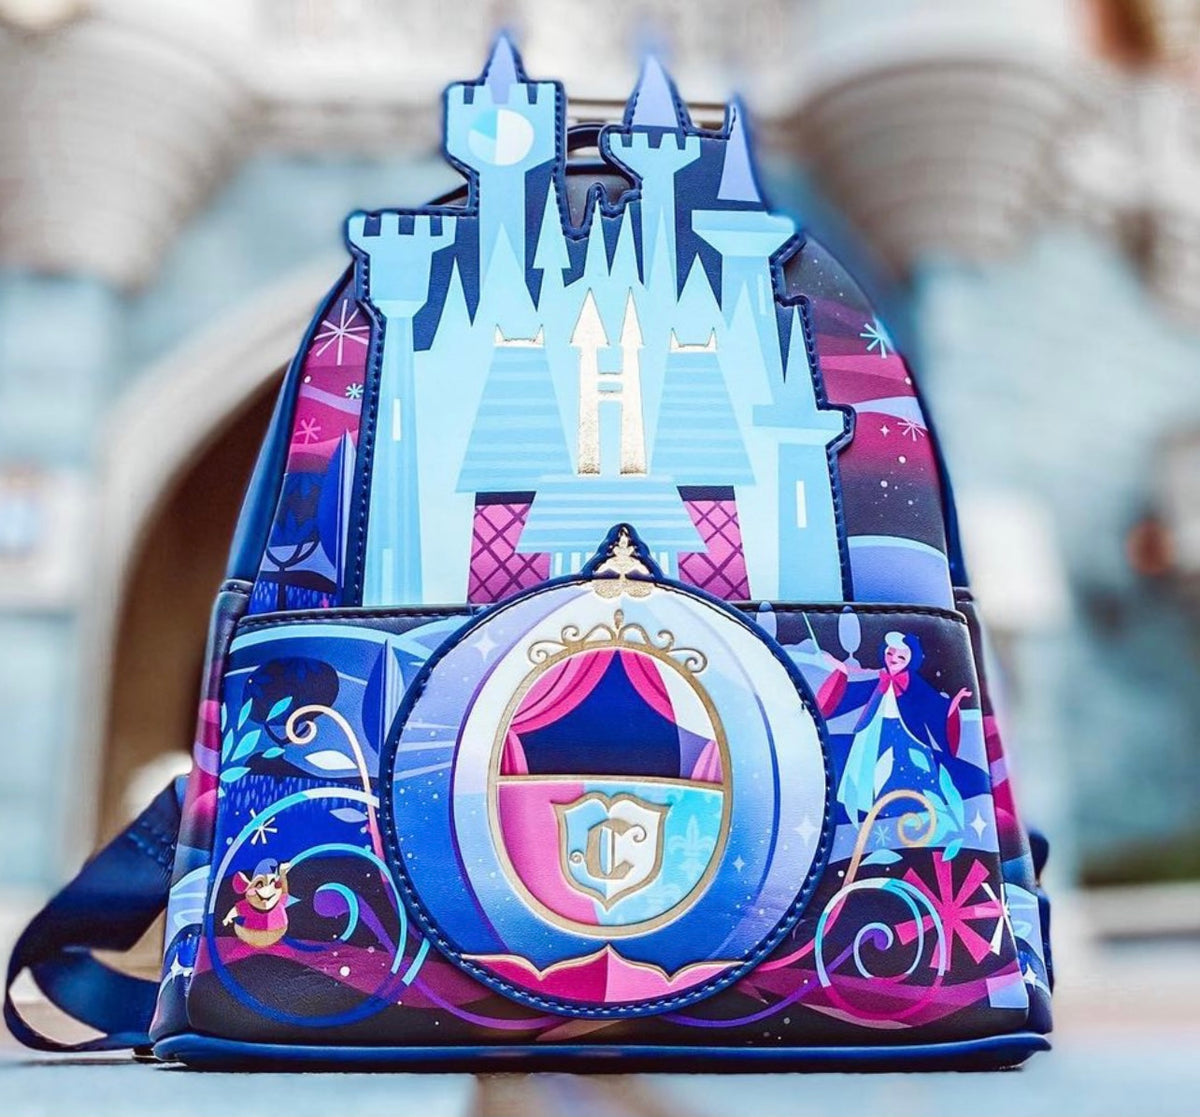 Cinderella Princess Scenes Mini Backpack